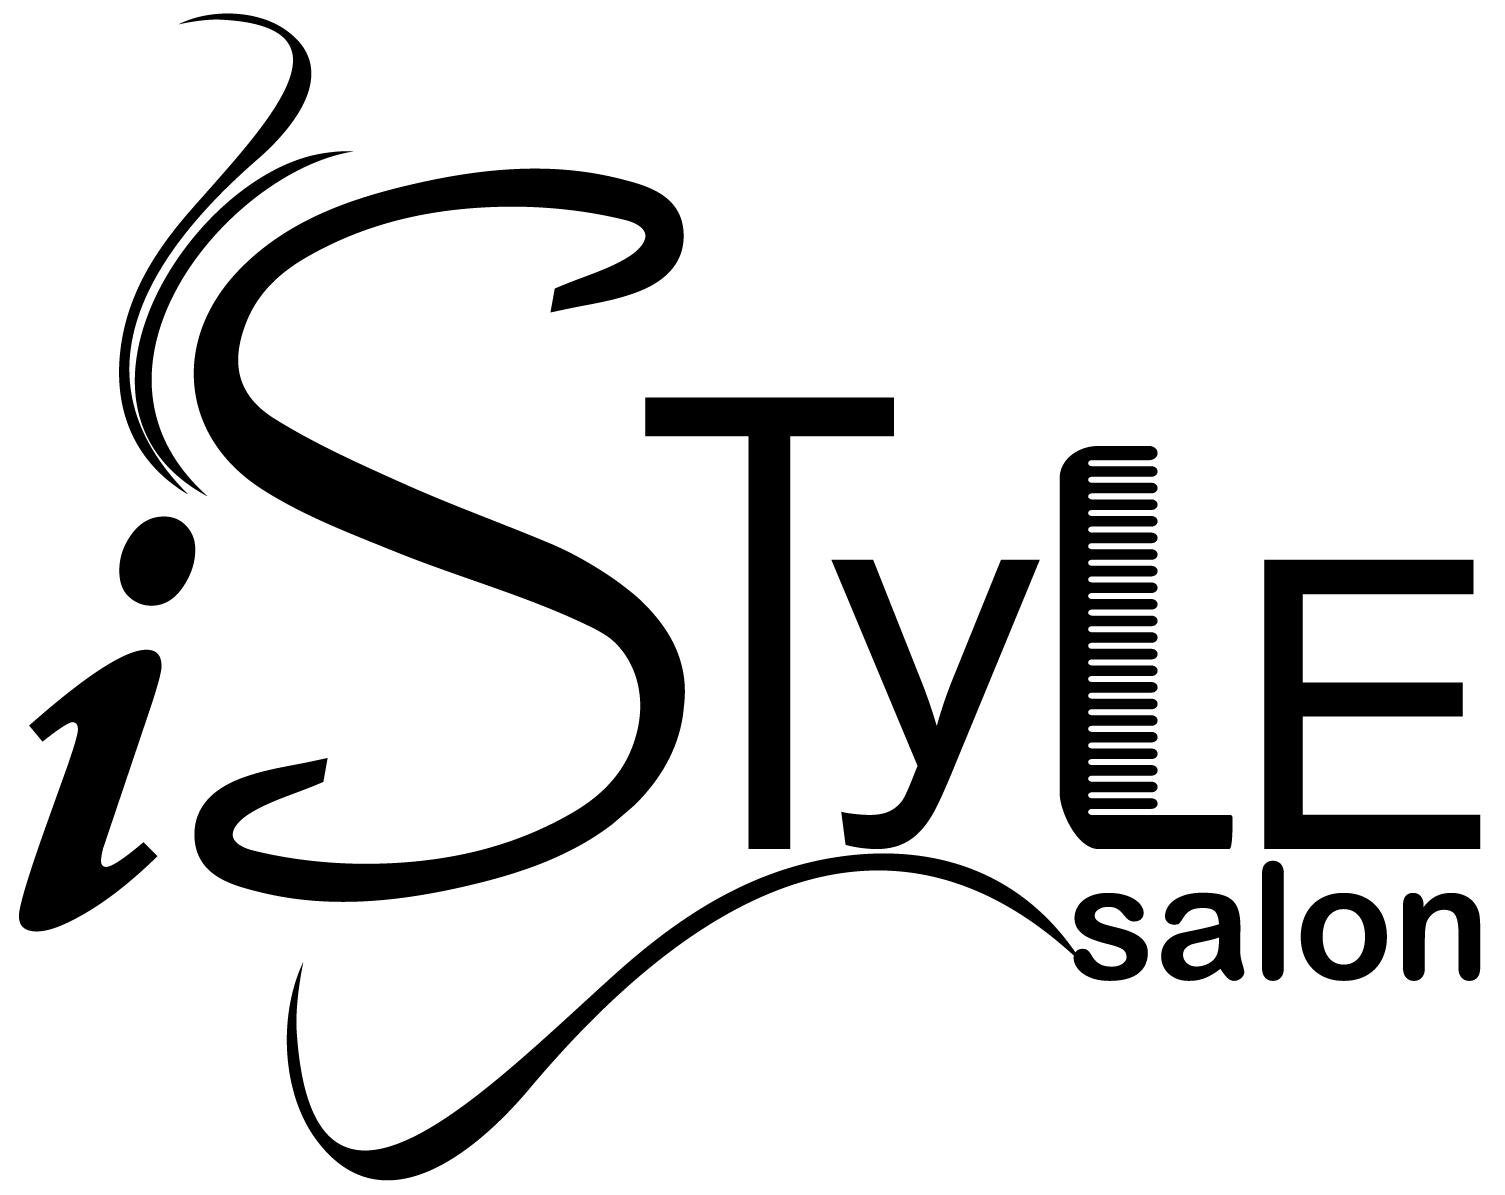 iSalon-logo-black